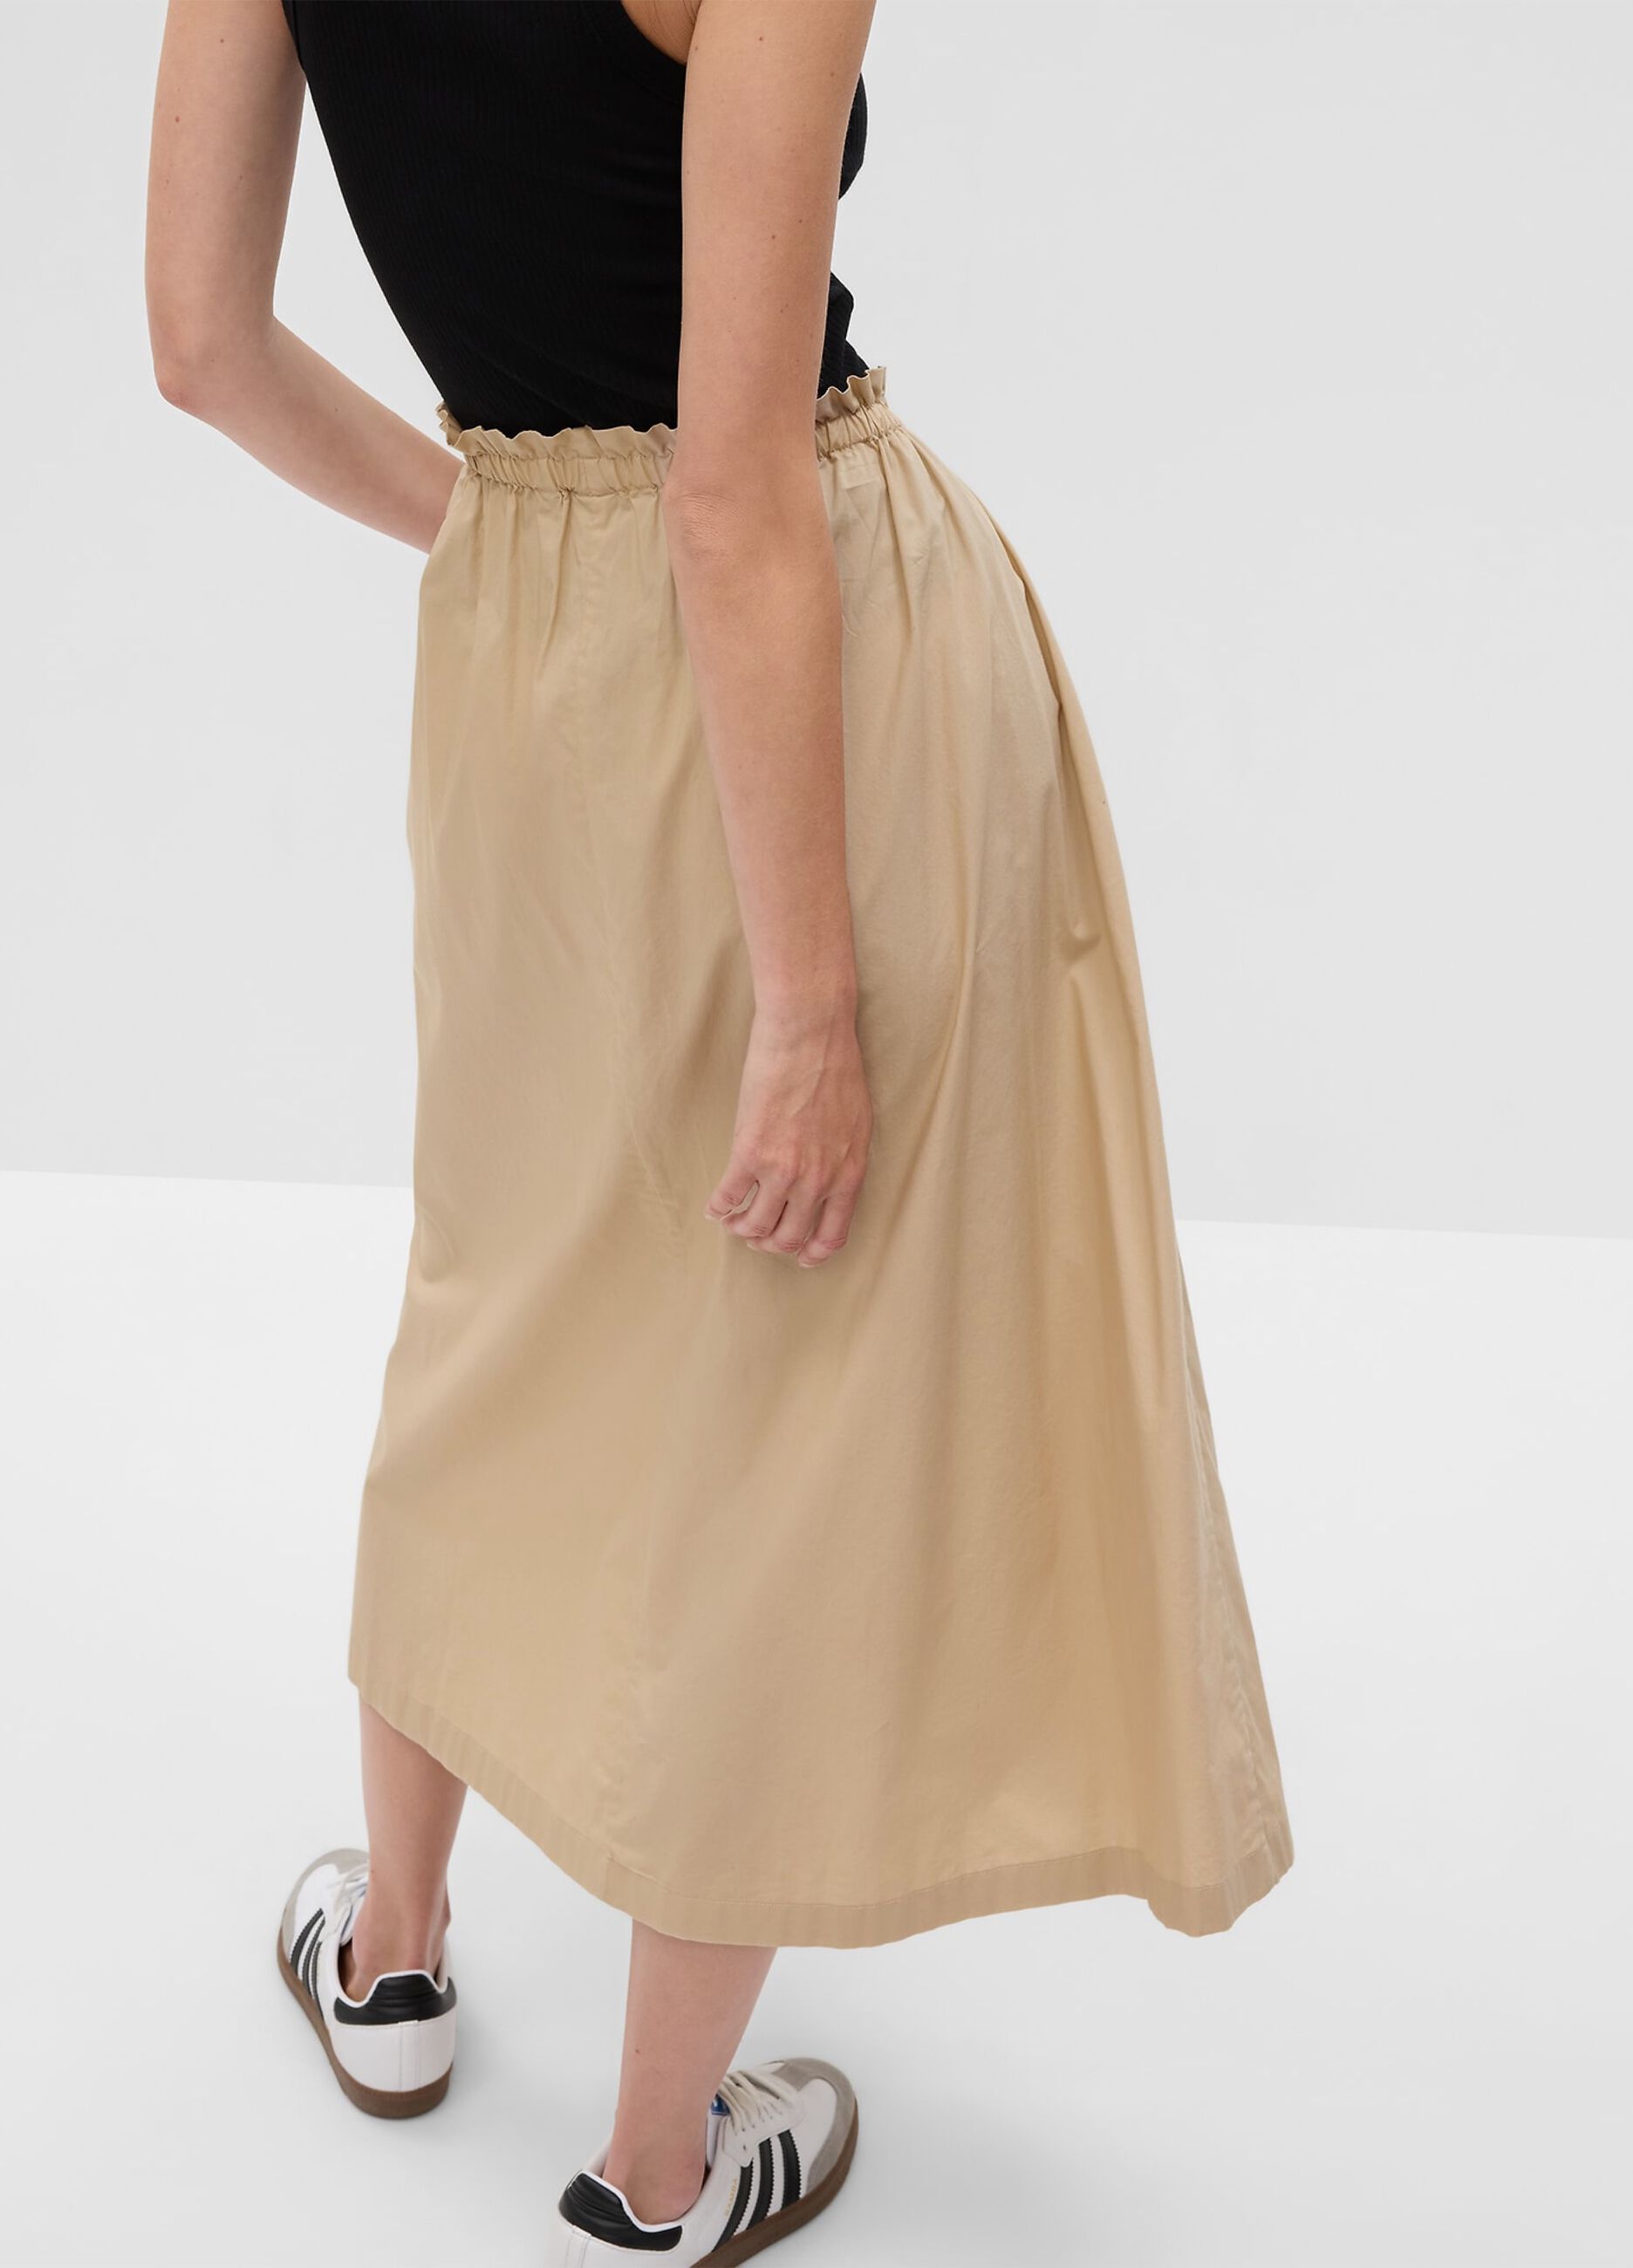 GAP Woman's Beige Paper bag midi skirt with drawstring | OVS